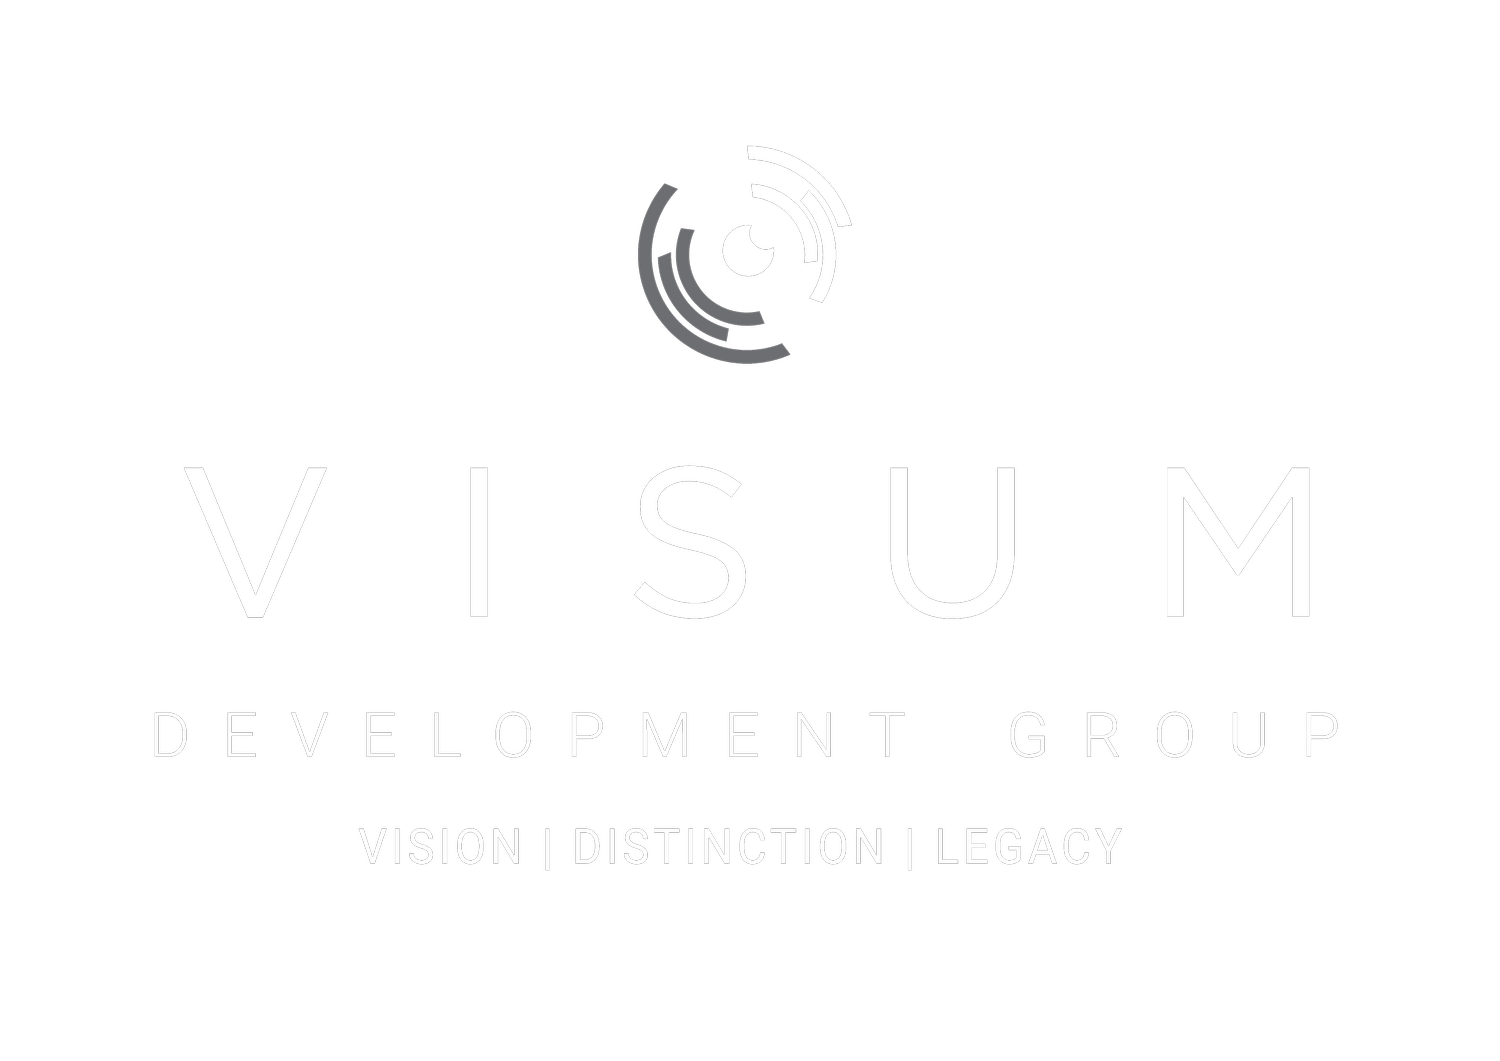 Visum Development Group 